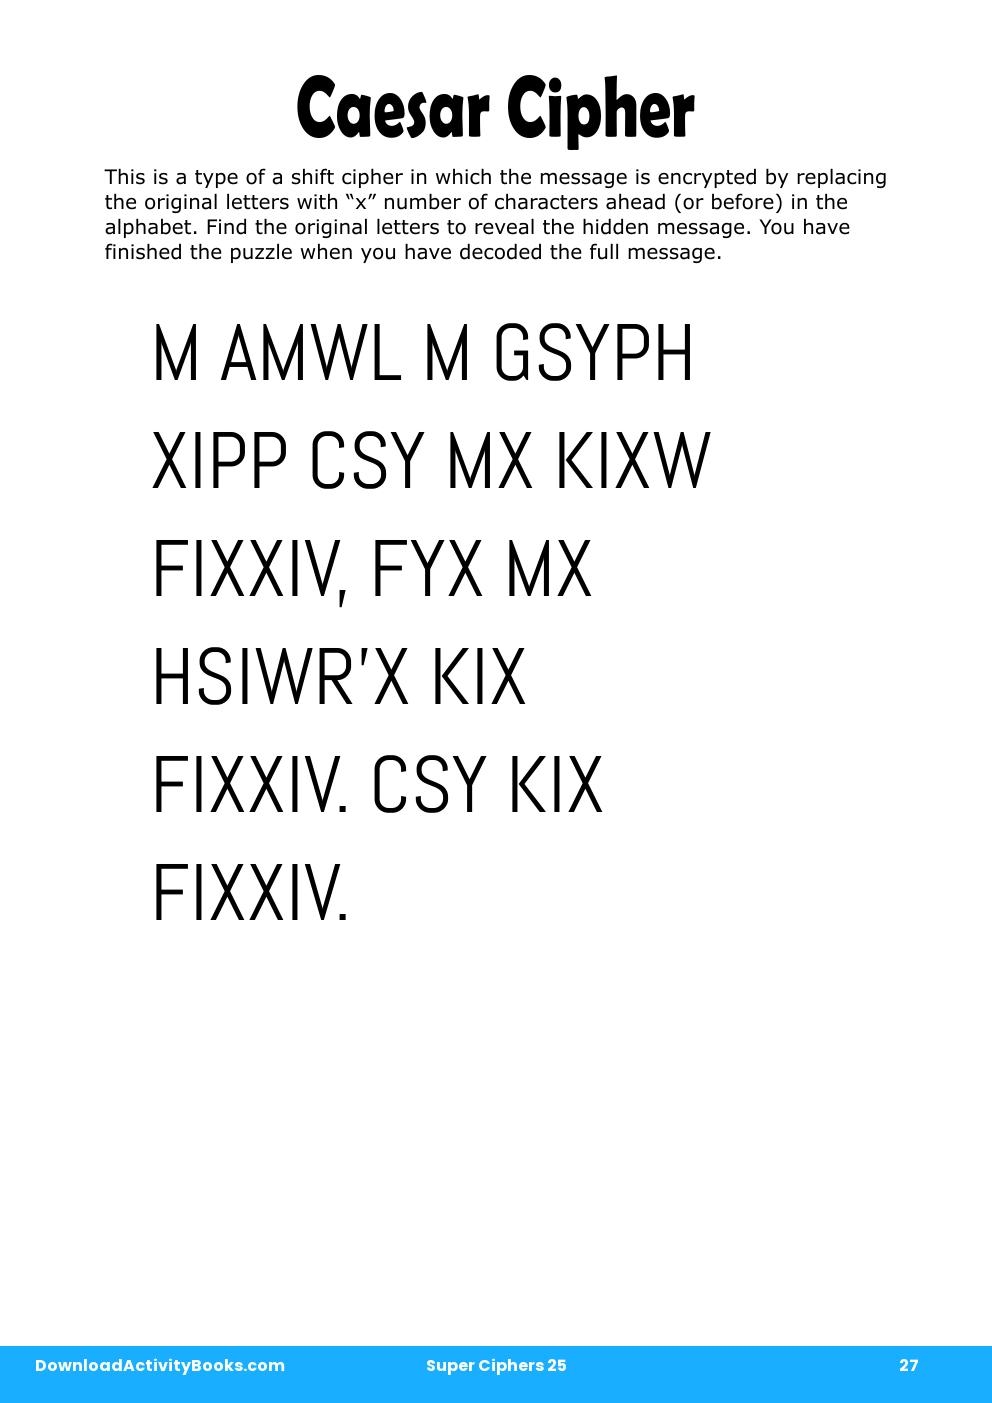 Caesar Cipher in Super Ciphers 25